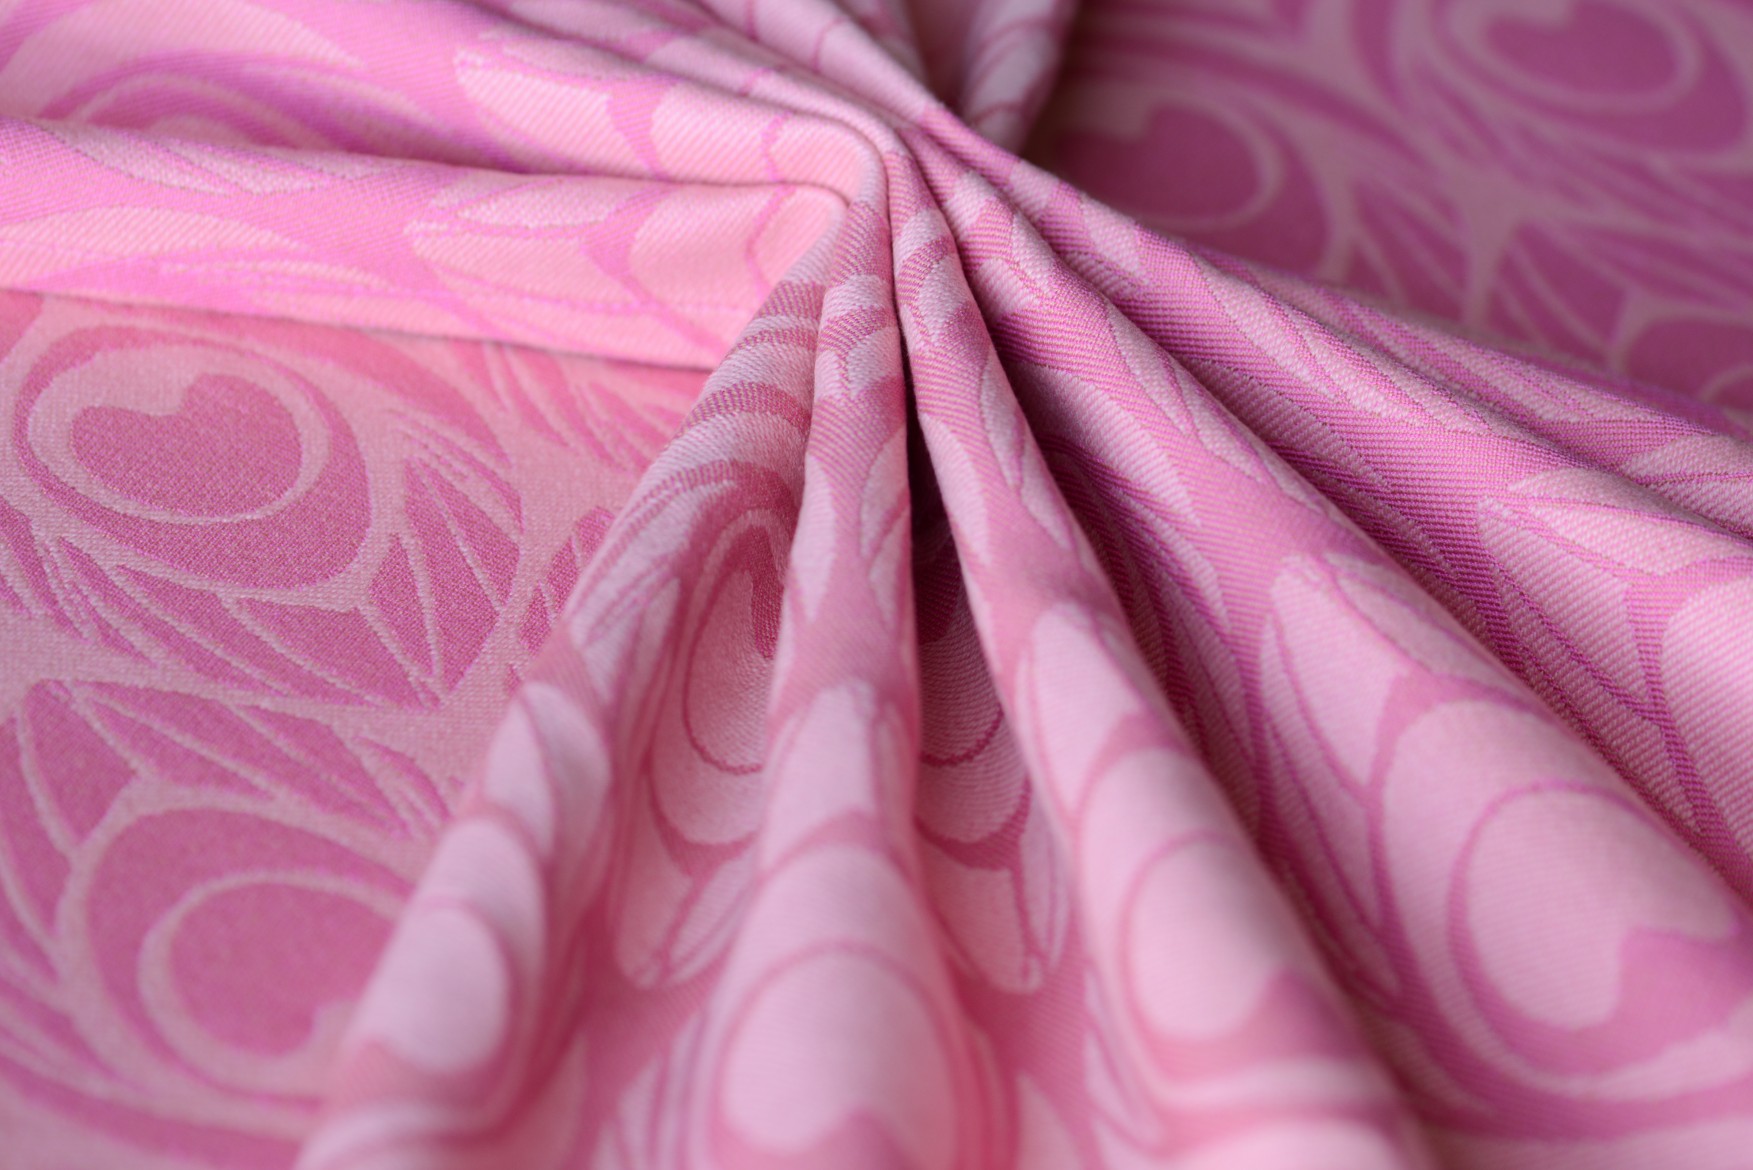 Artipoppe Argus Lust Wrap (cashmere) Image